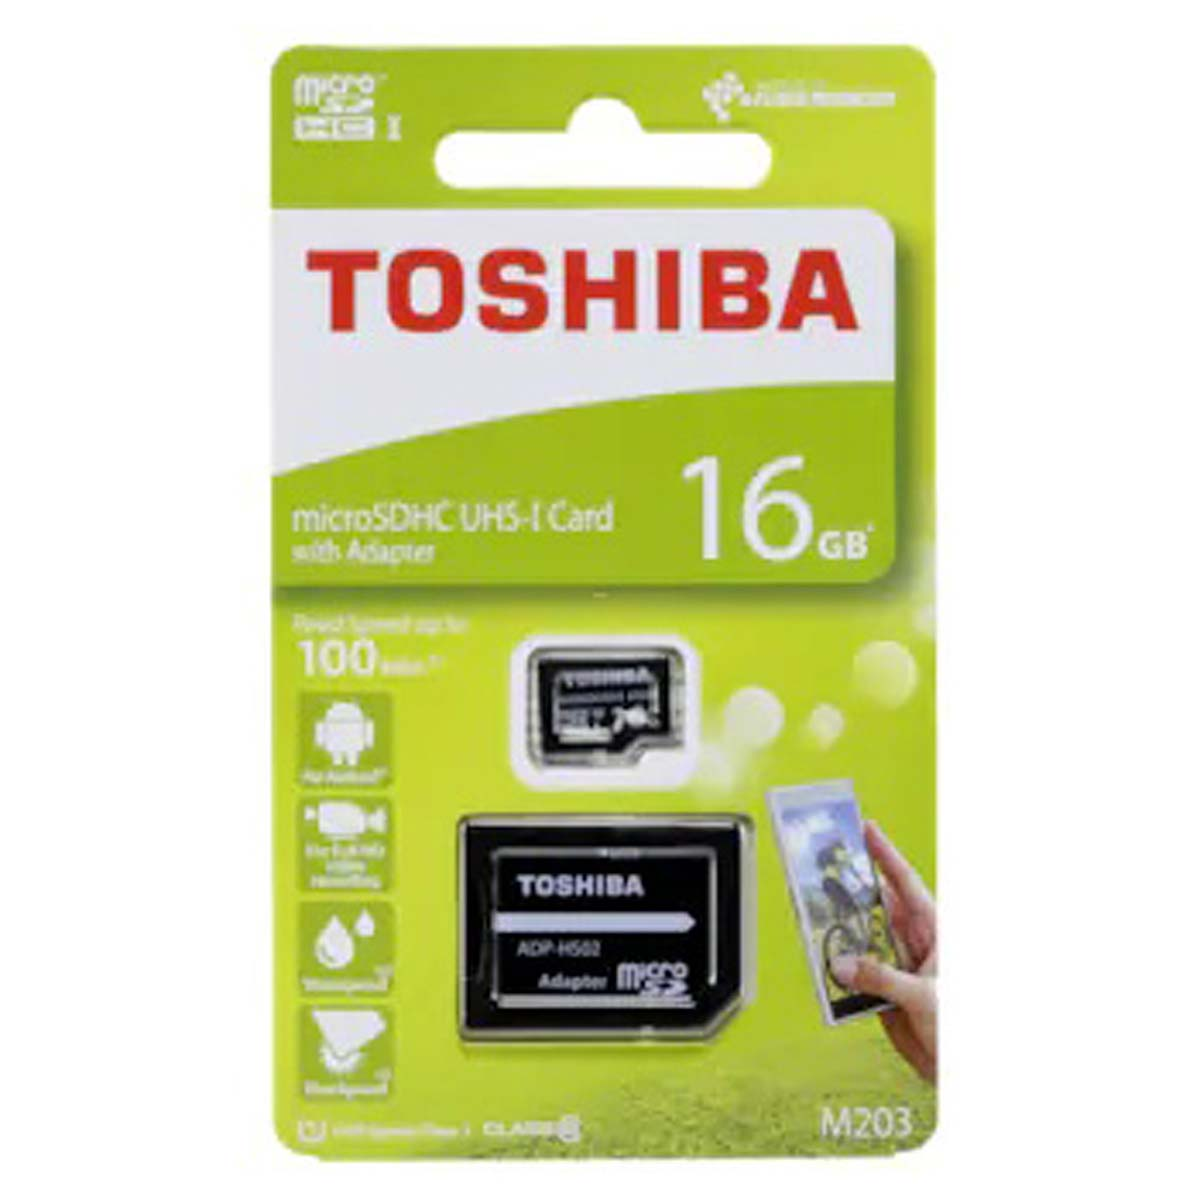 TOSHIBA 41094, Speicherkarte, GB, 16 Micro-SDHC 100 Mbit/s